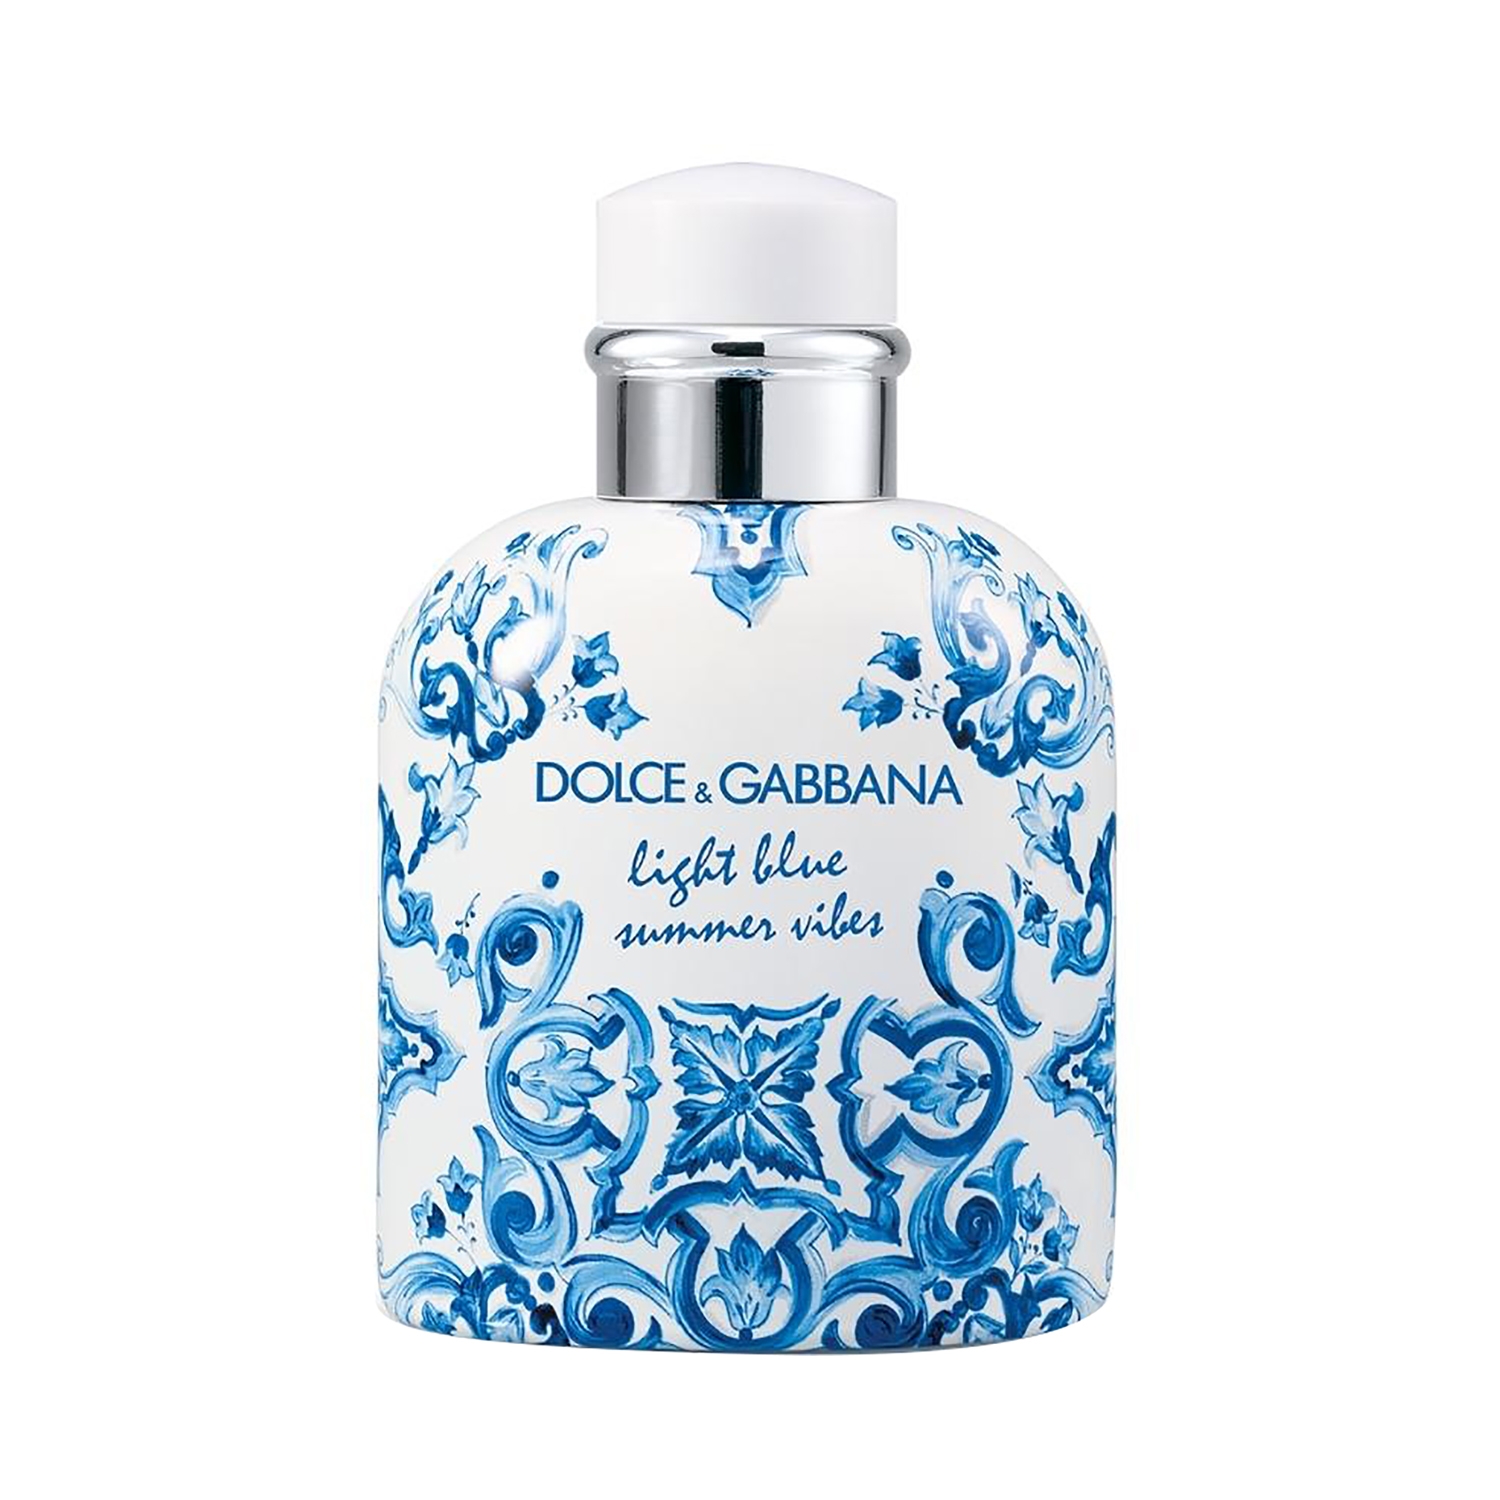 Dolce&Gabbana Light Blue Summer Vibes pour Homme EDT (125ml)